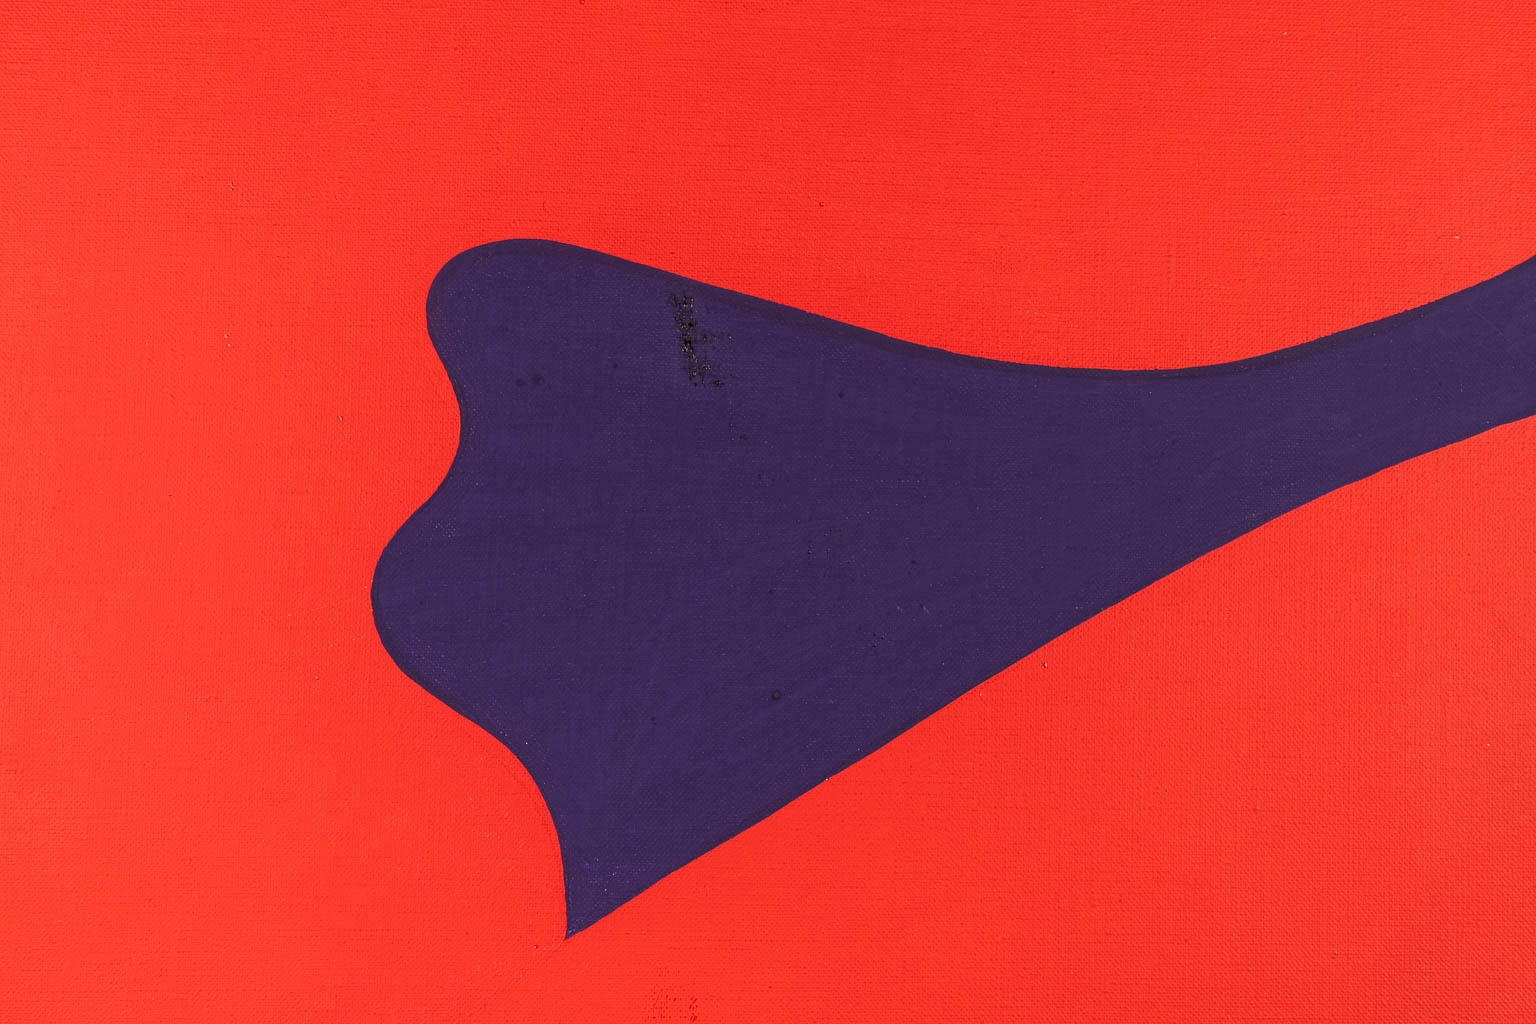 Guy BAEKELMANS (1940) 'Divided' Tempera on canvas, 1969. (W:120 x H:180 cm)